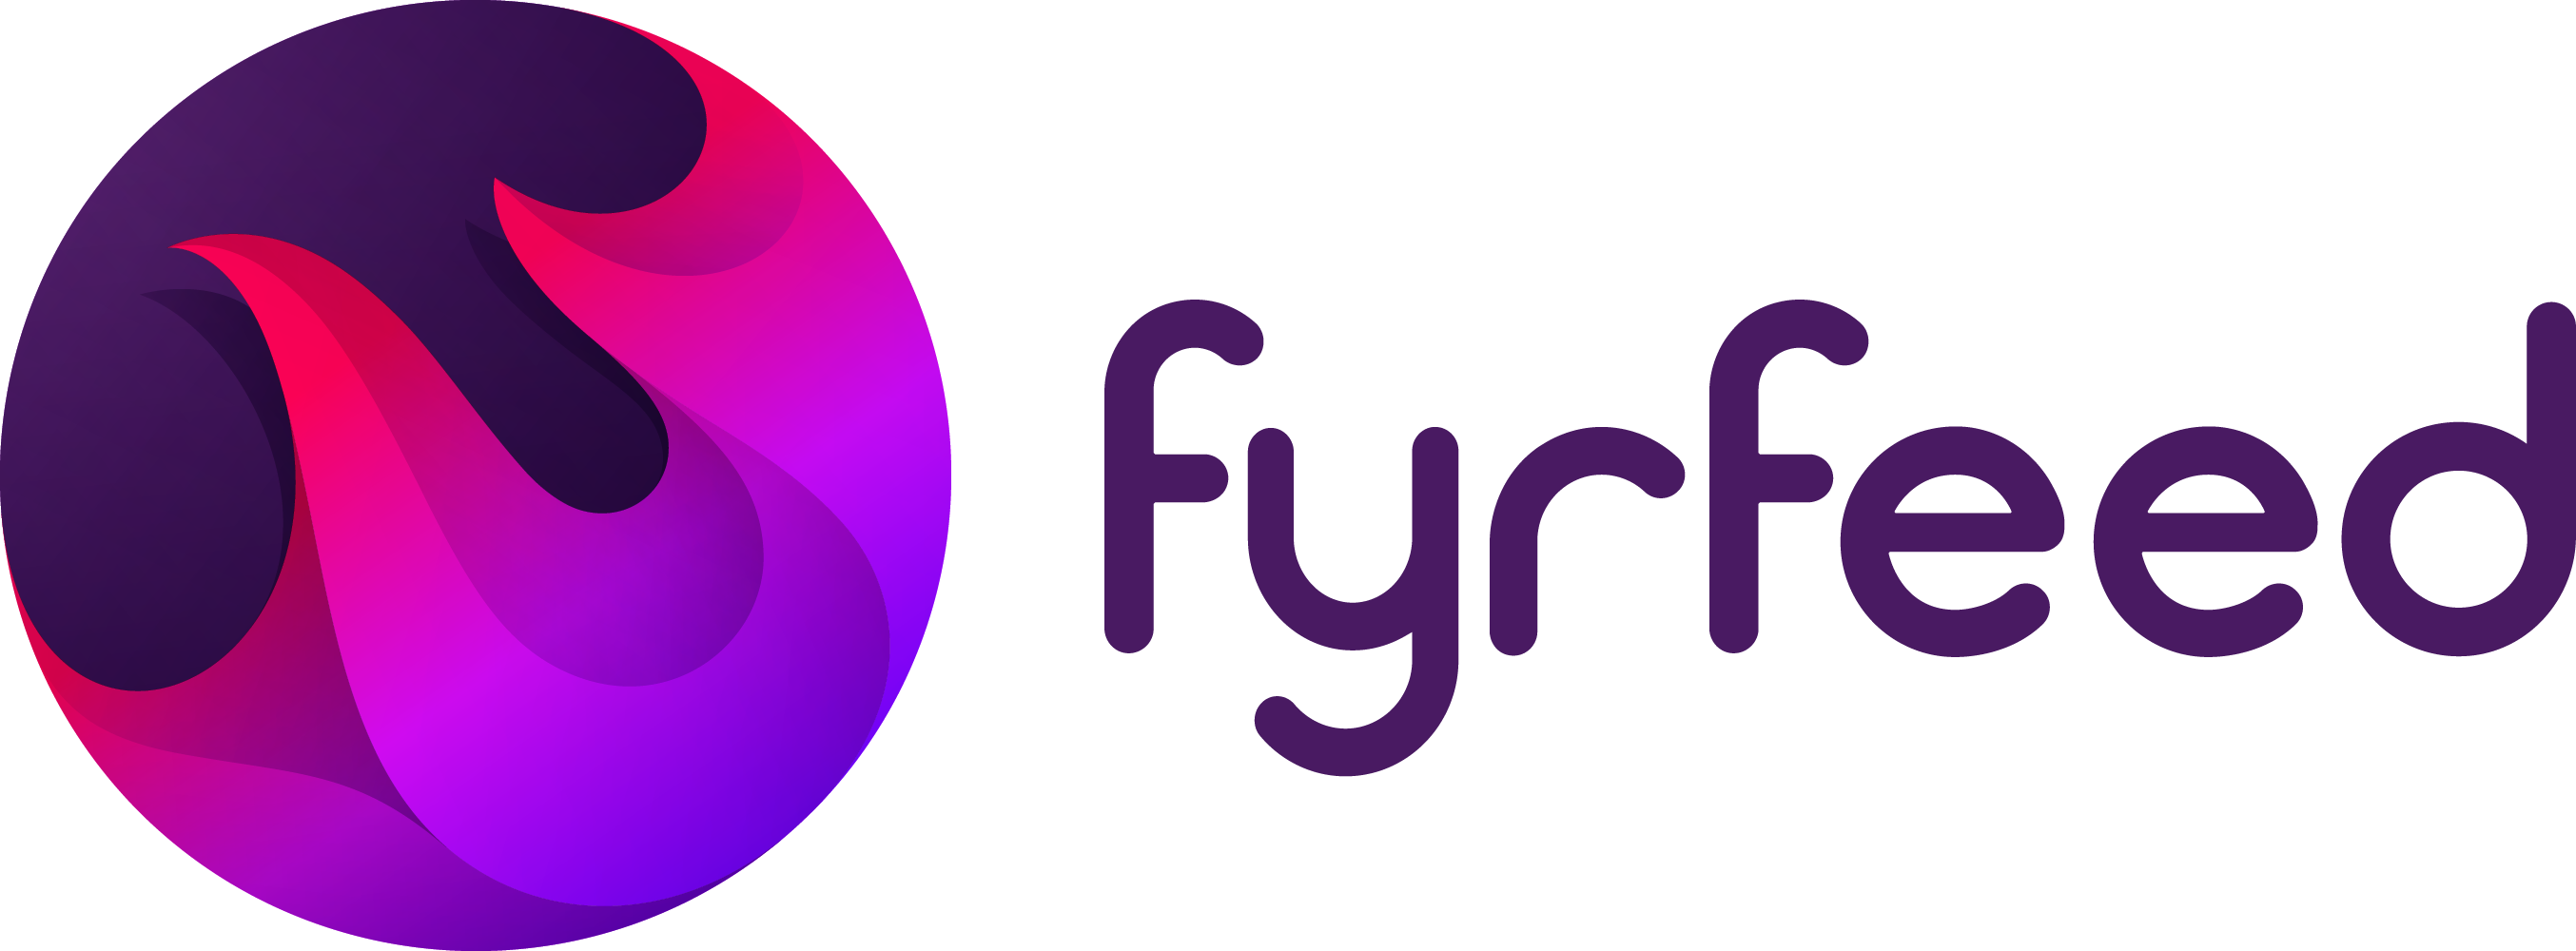 fyrfeed logo horizontal